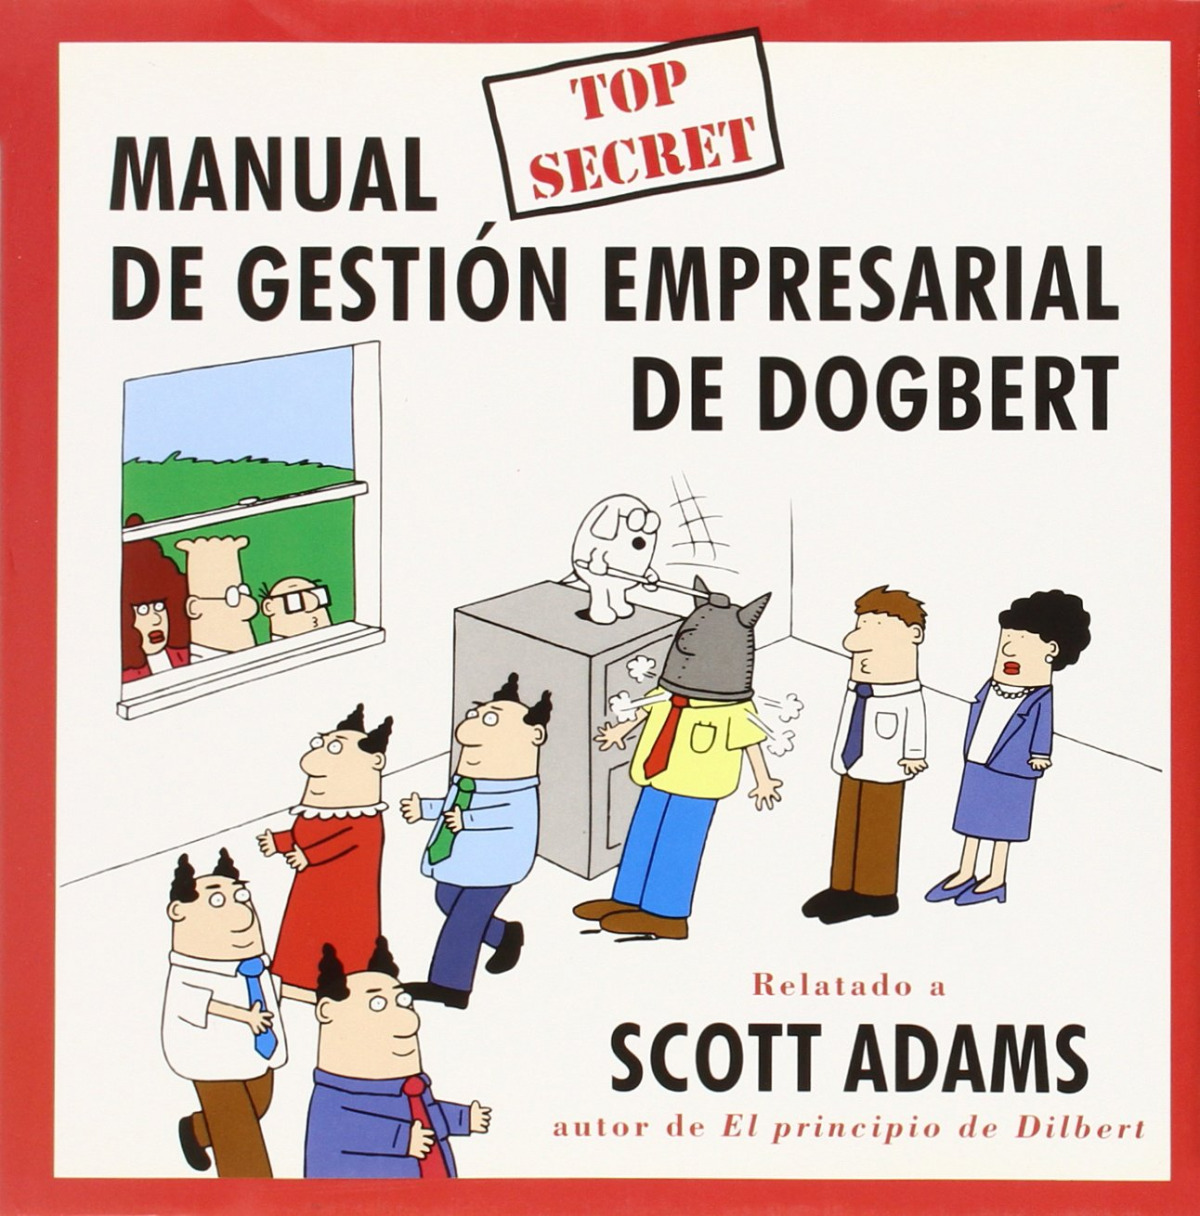 Top secret manual gestion empresarial dogbert - Scott Adams